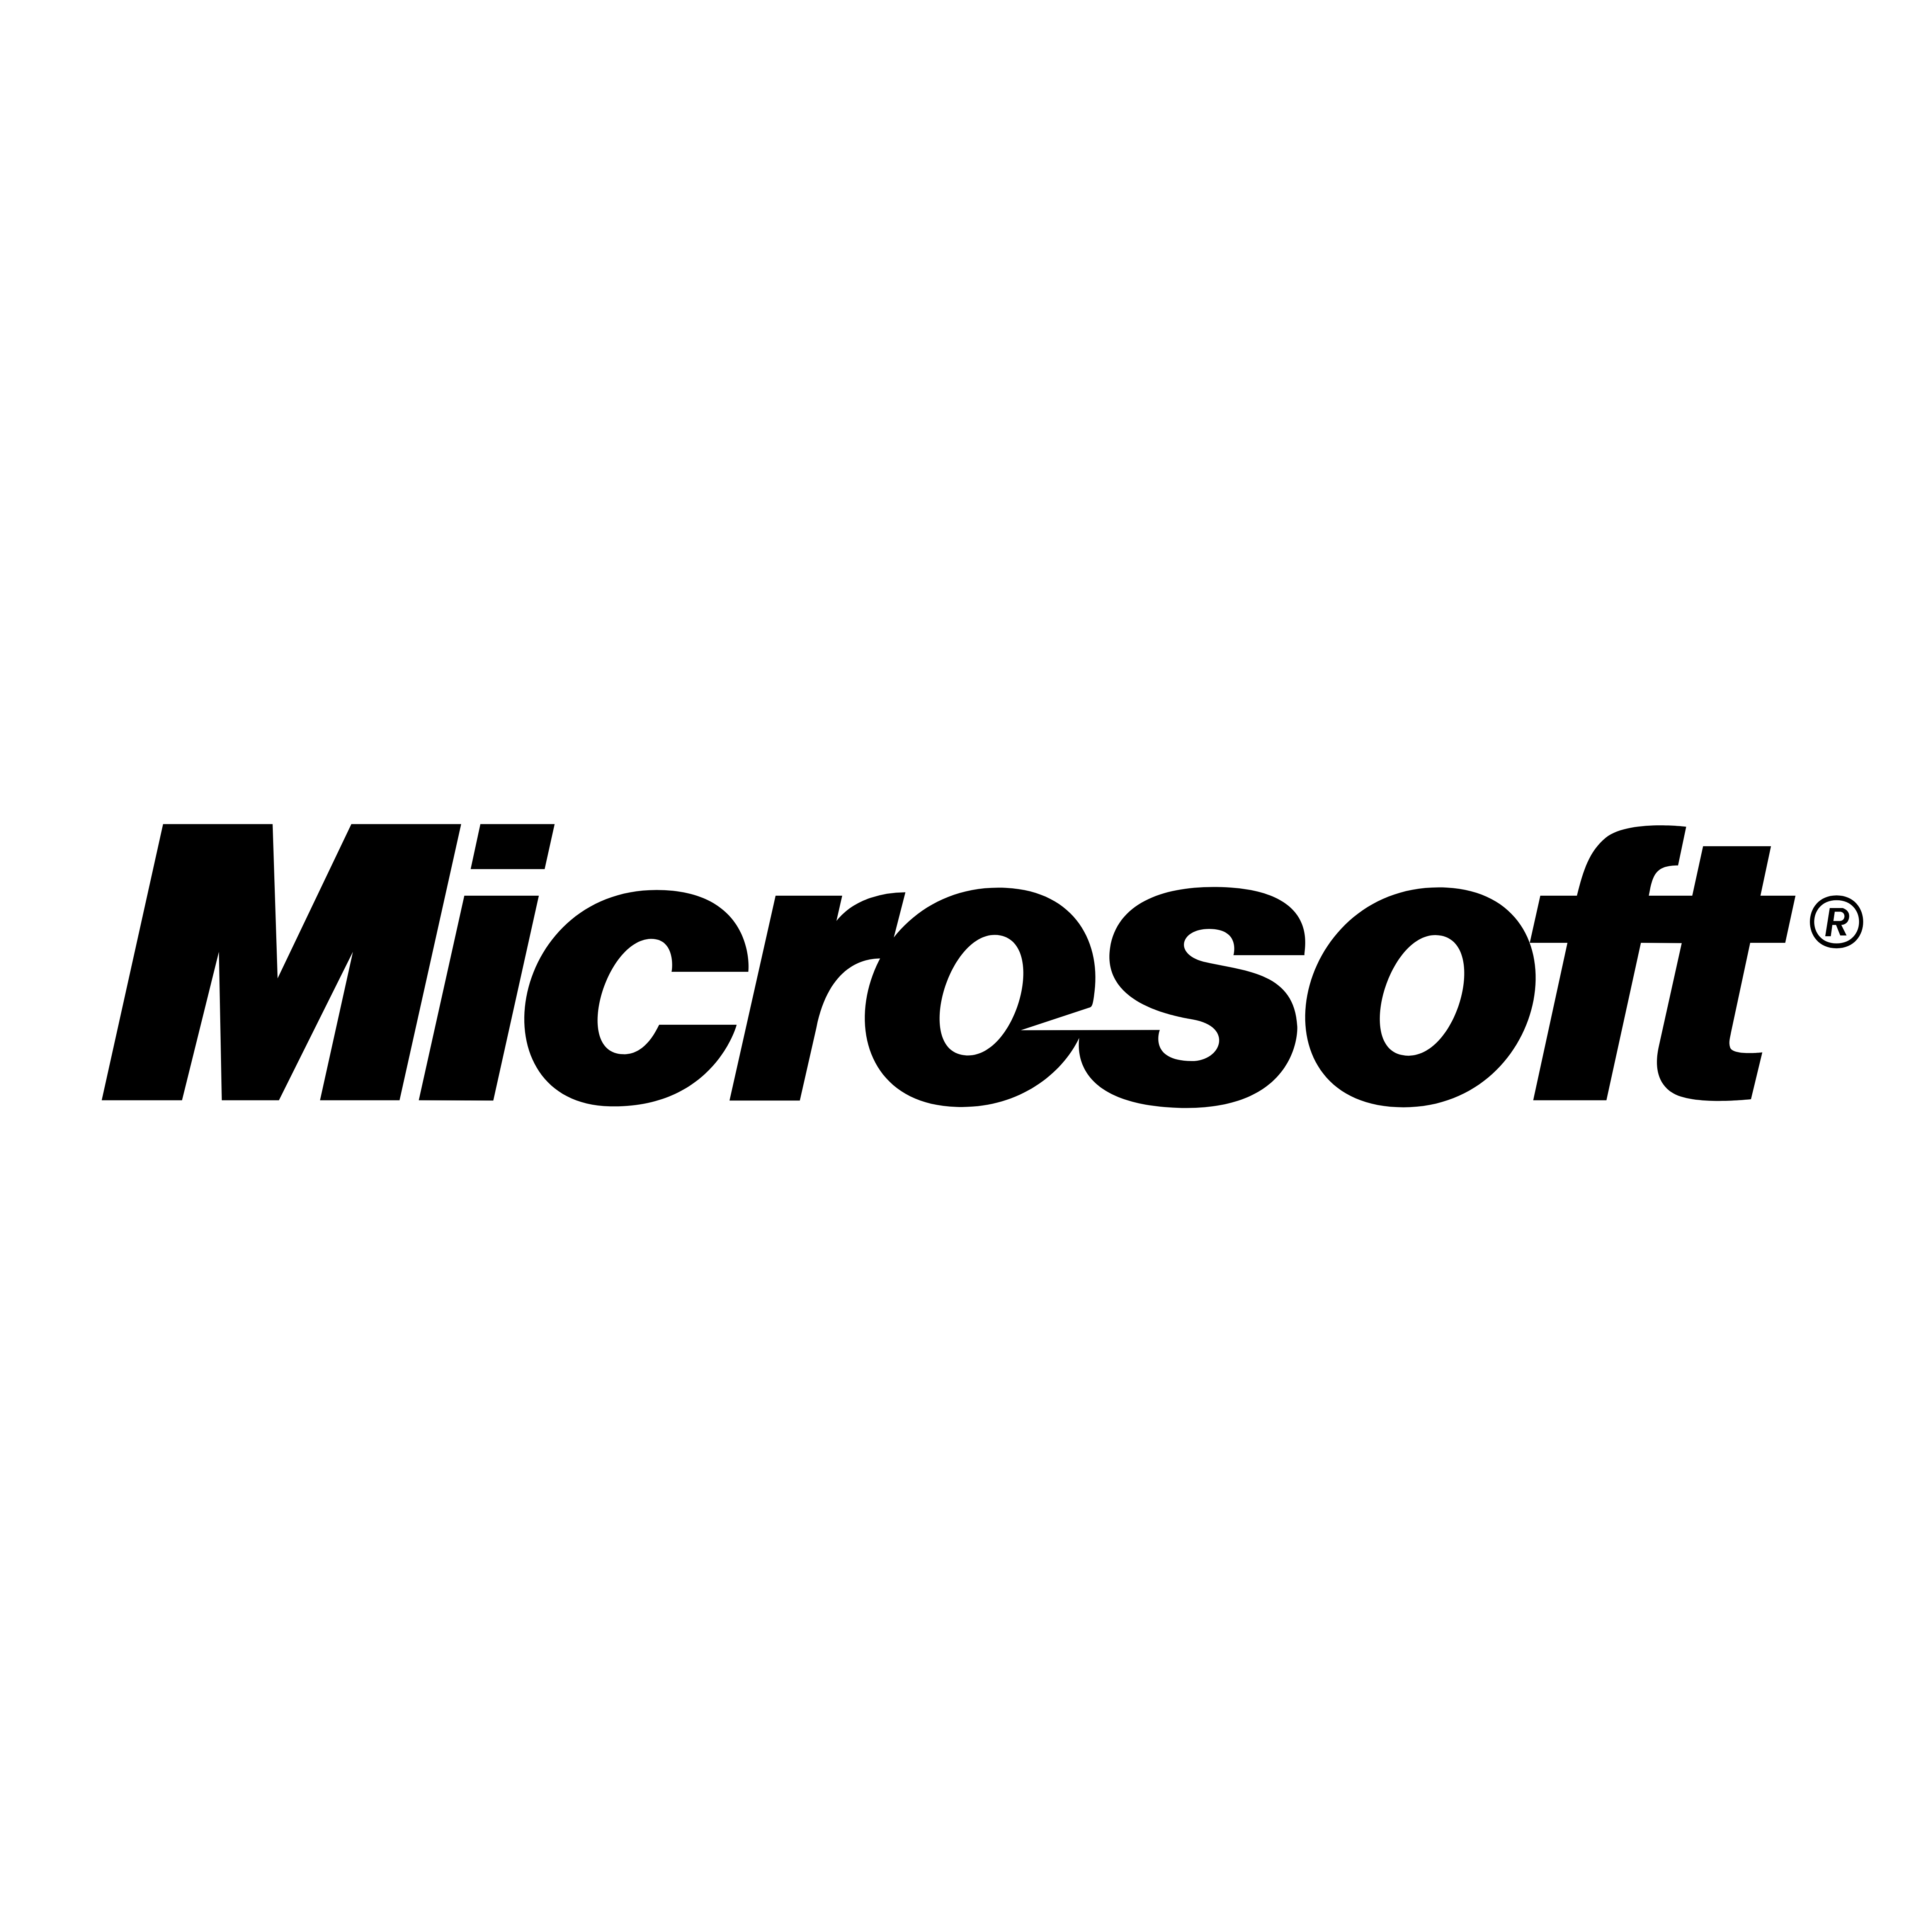 Microsoft – Logos Download - Microsoft, Transparent background PNG HD thumbnail